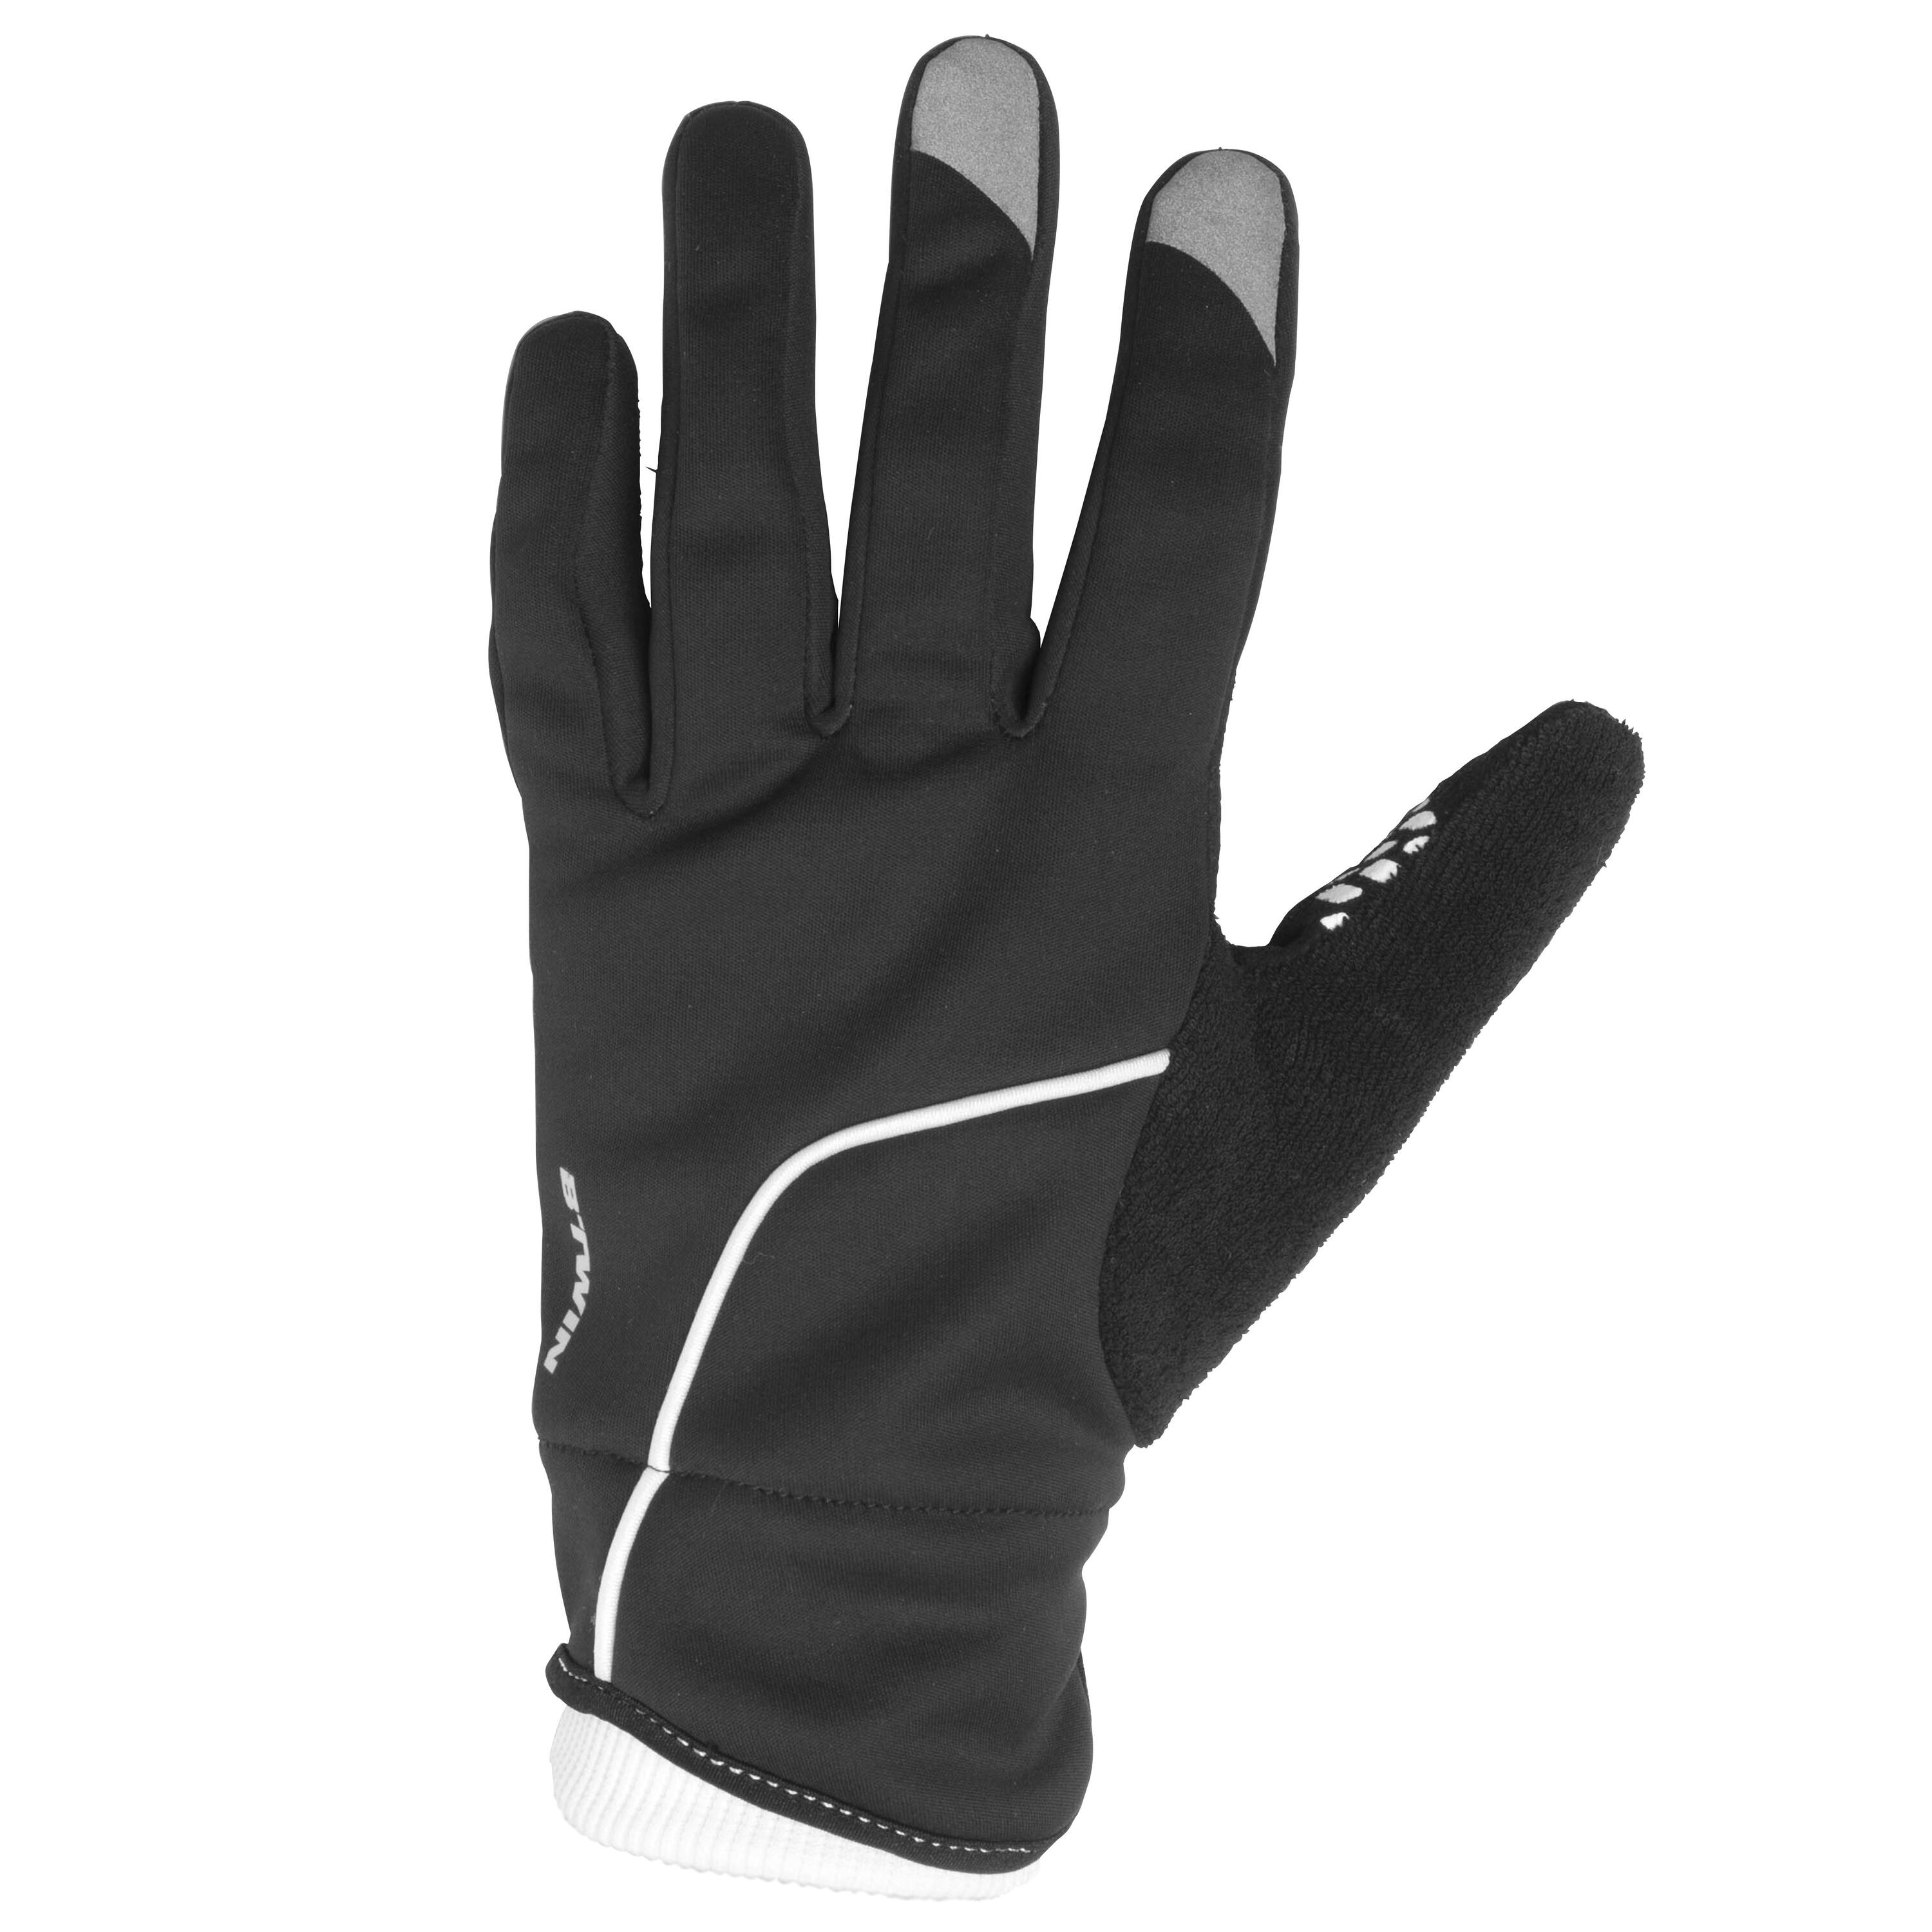 TRIBAN 700 Winter Cycling Gloves - Black/White